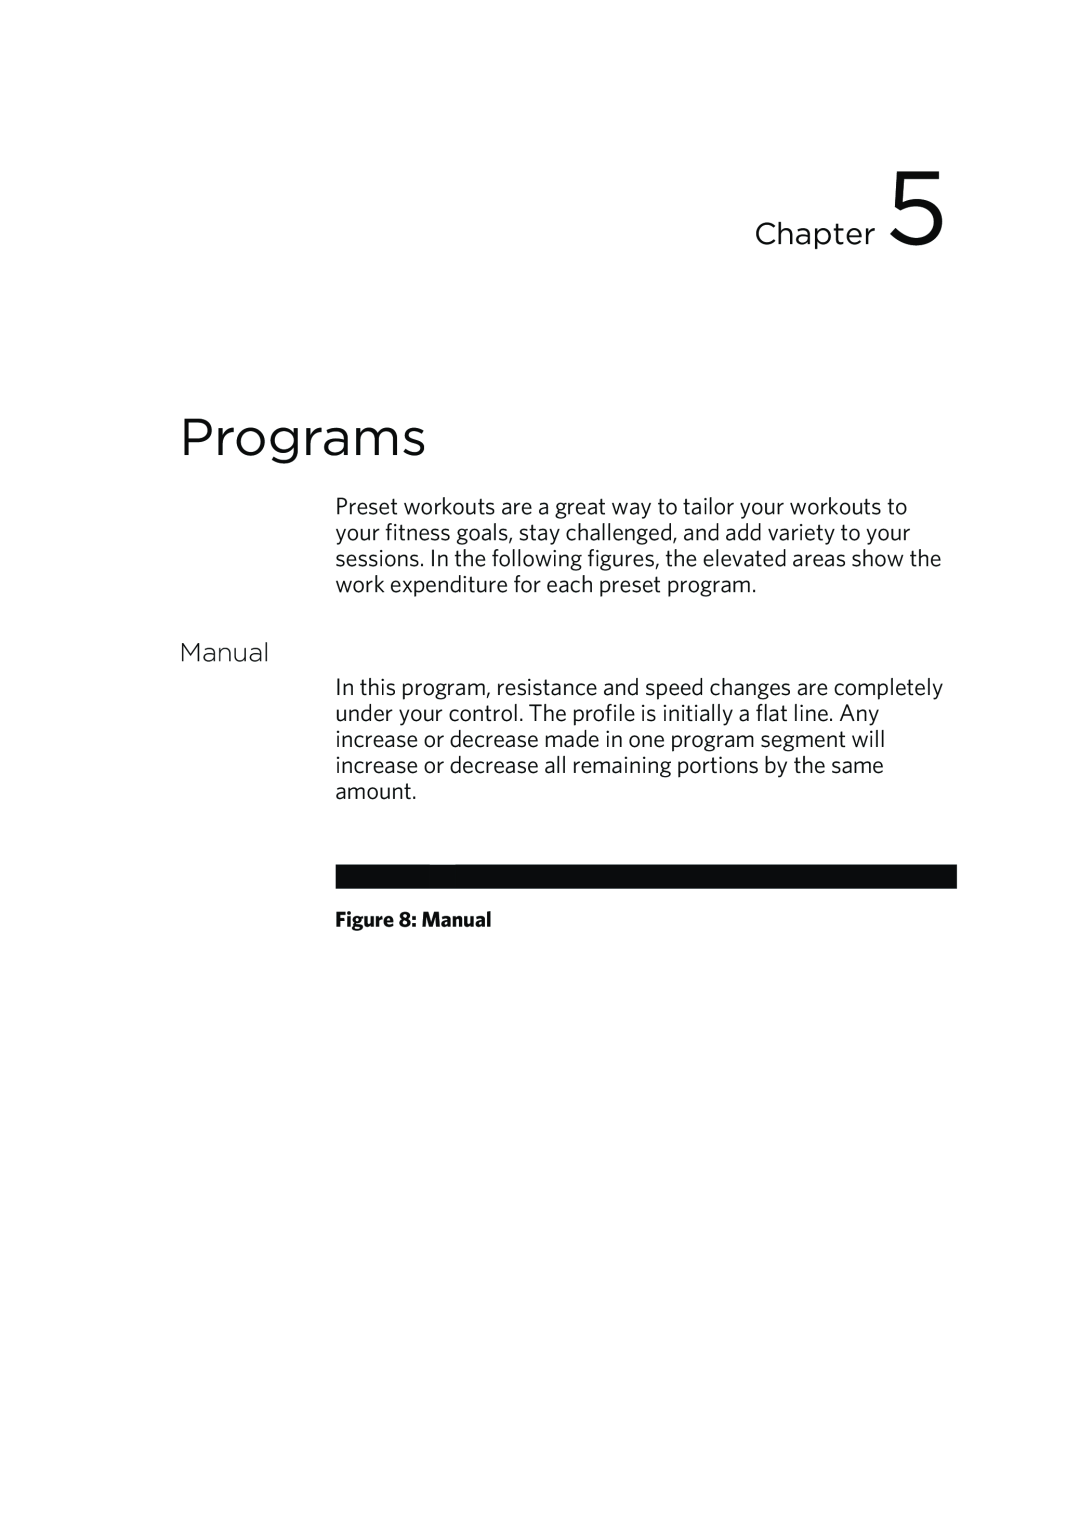 Precor 300753-201 manual Programs, Manual, Chapter 